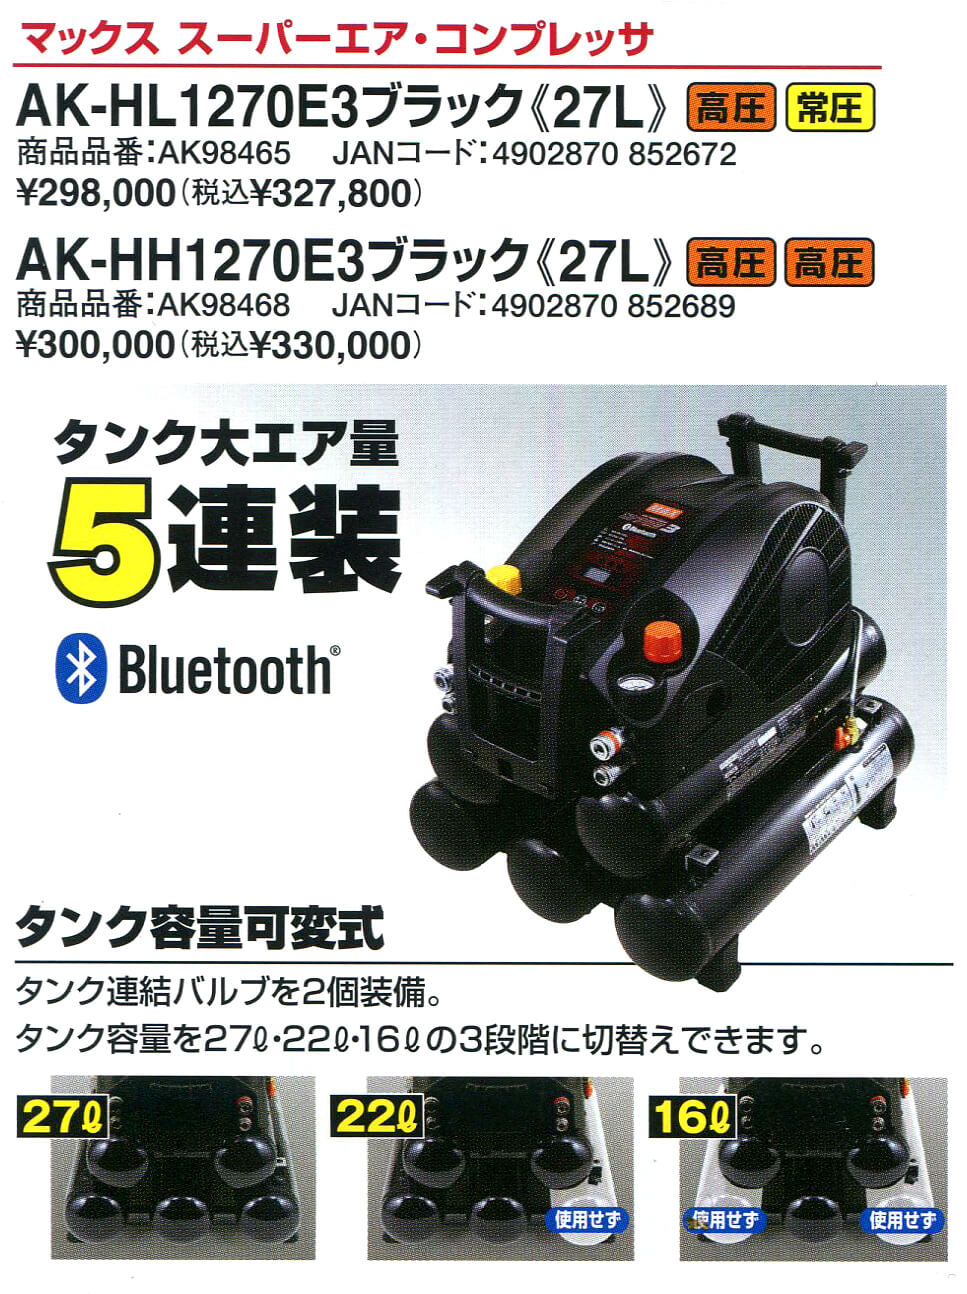 MAX AK-HL1270E3 エアーコンプレッサー【徹底解説】